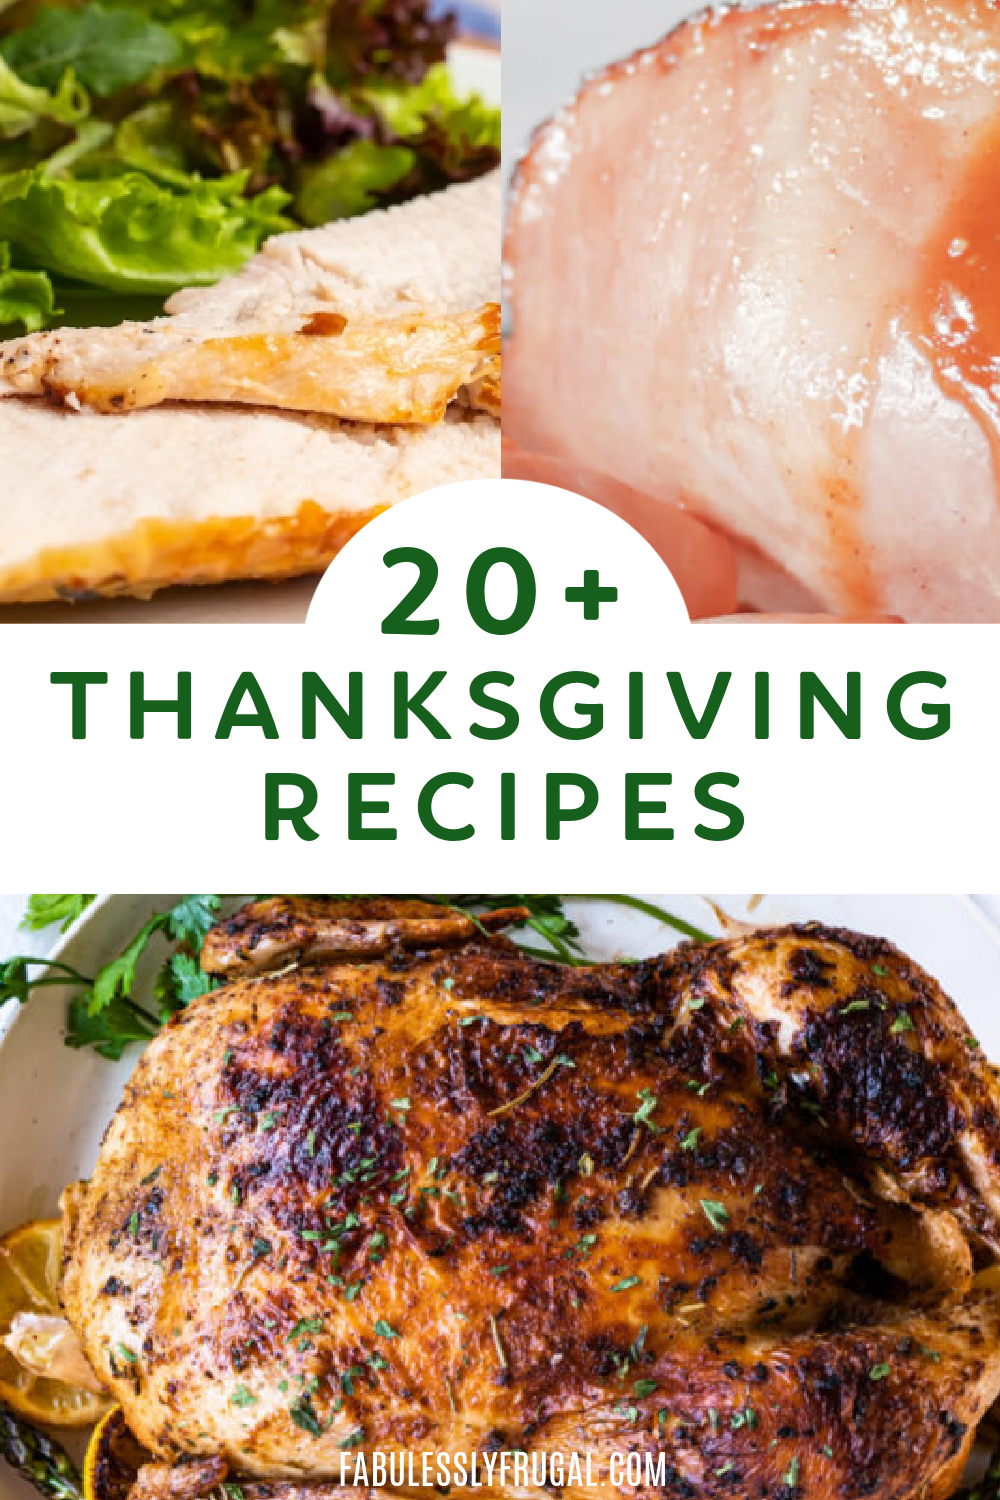 20+ Thanksgiving recipes